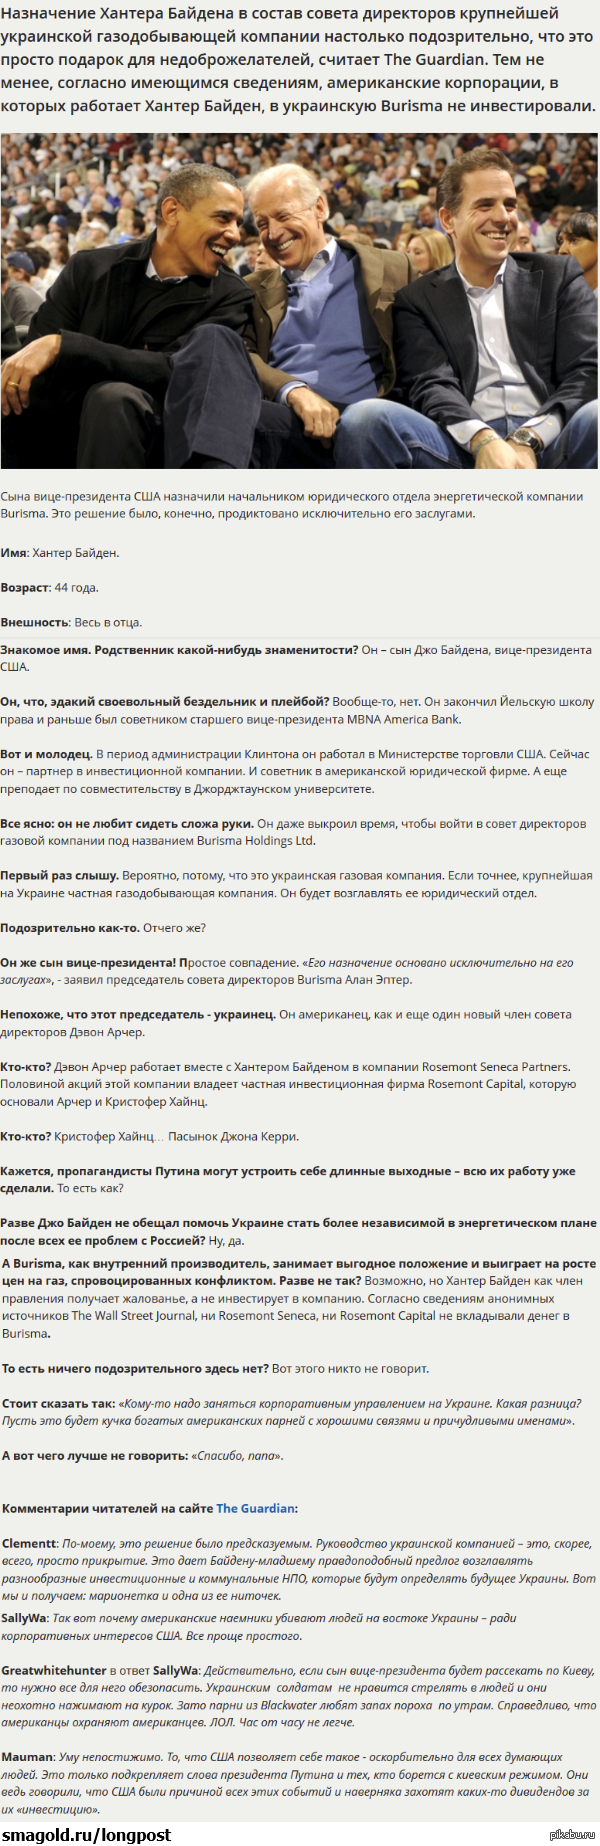          ? http://www.theguardian.com/business/shortcuts/2014/may/14/hunter-biden-job-board-ukraine-biggest-gas-producer-burisma